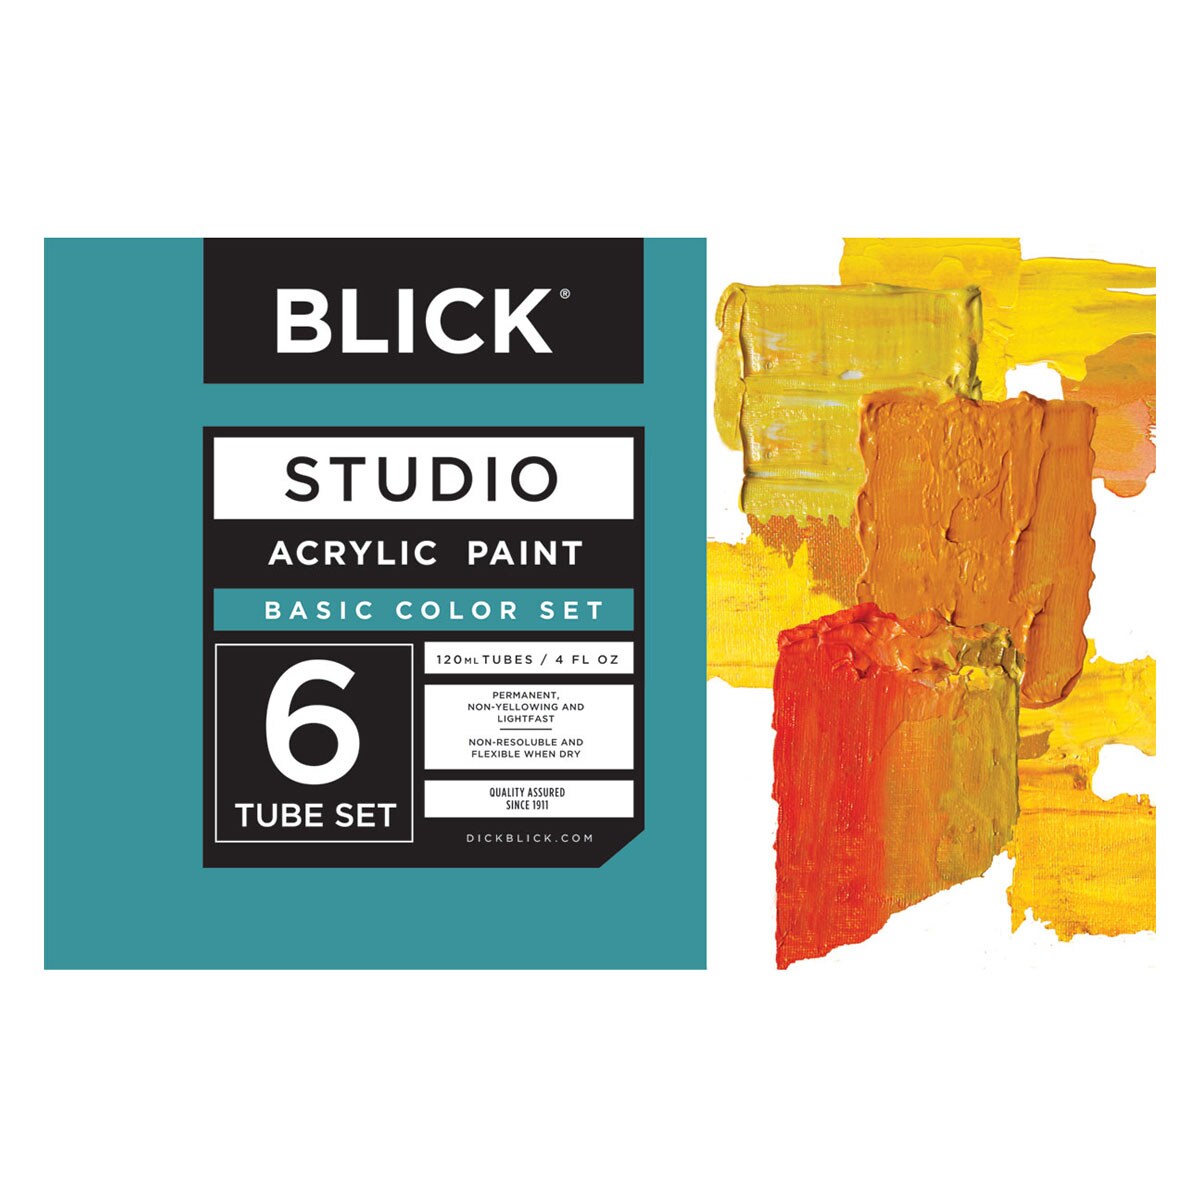 Blick Studio Acrylics - Set of 6 colors, 120 ml tubes